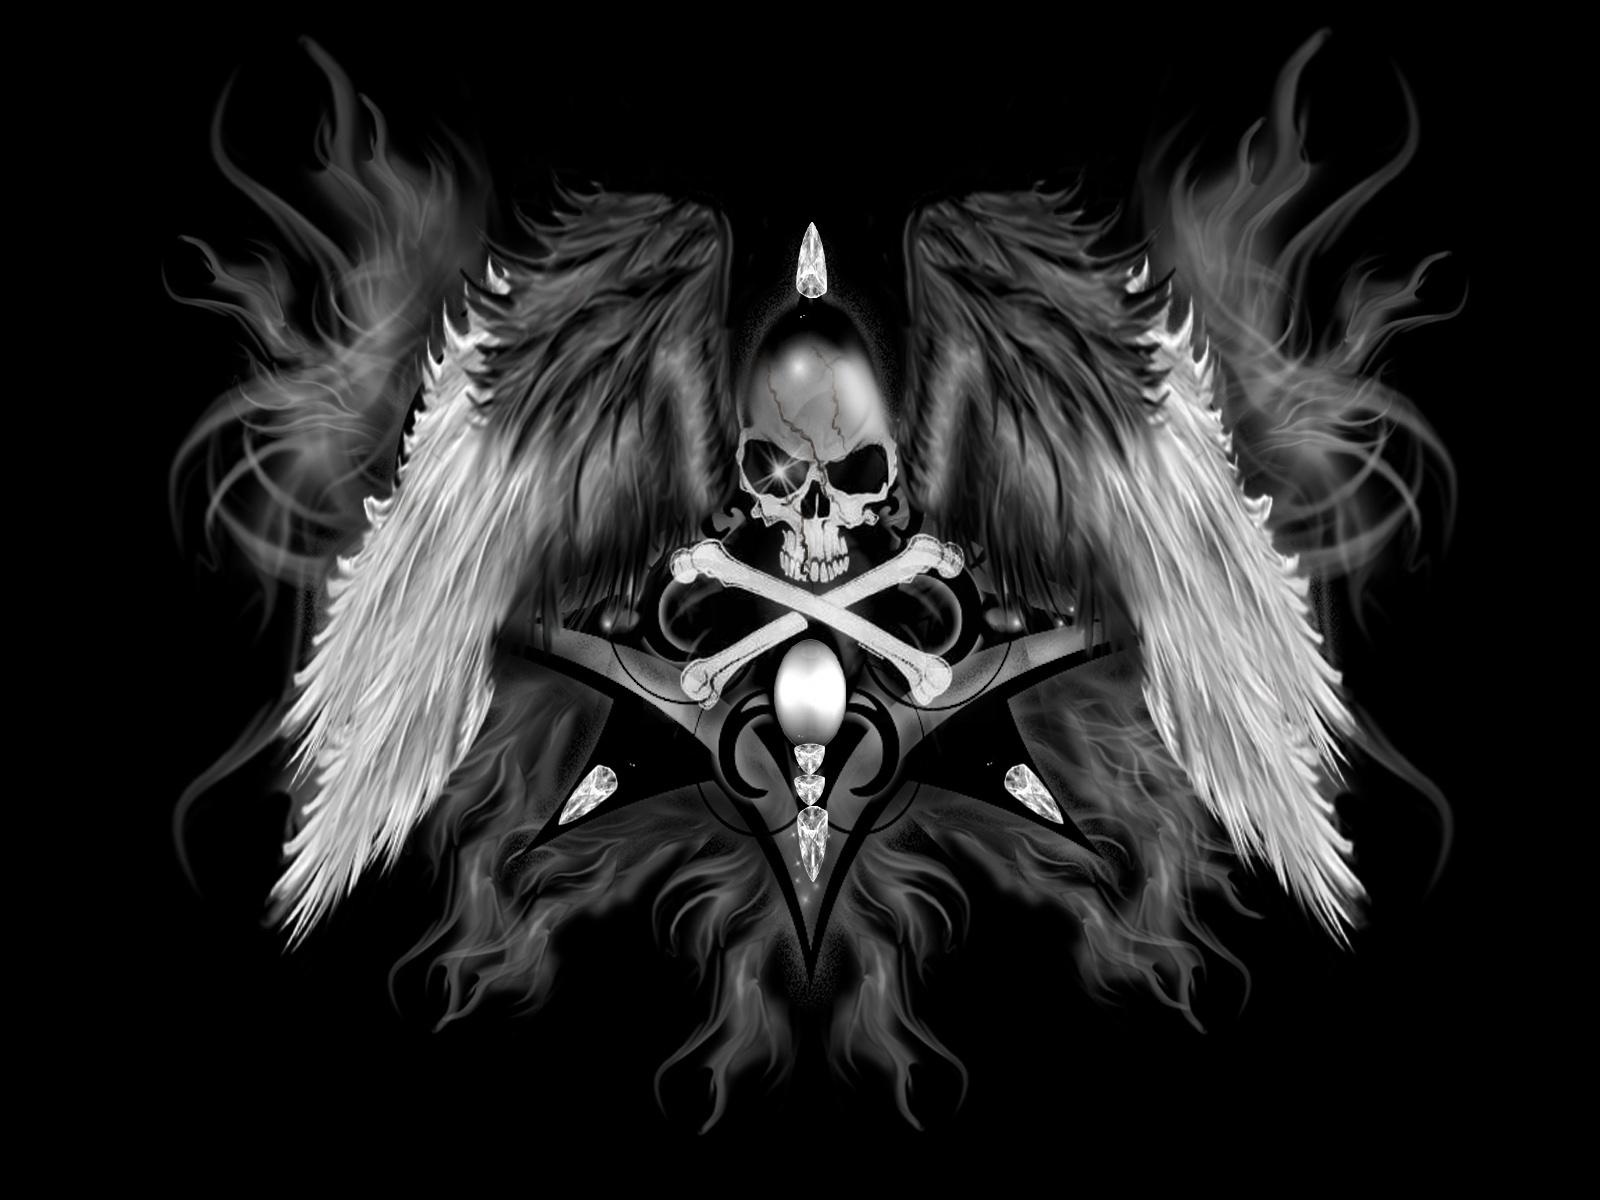 skeleton wallpaper,darkness,wing,fictional character,illustration,supernatural creature